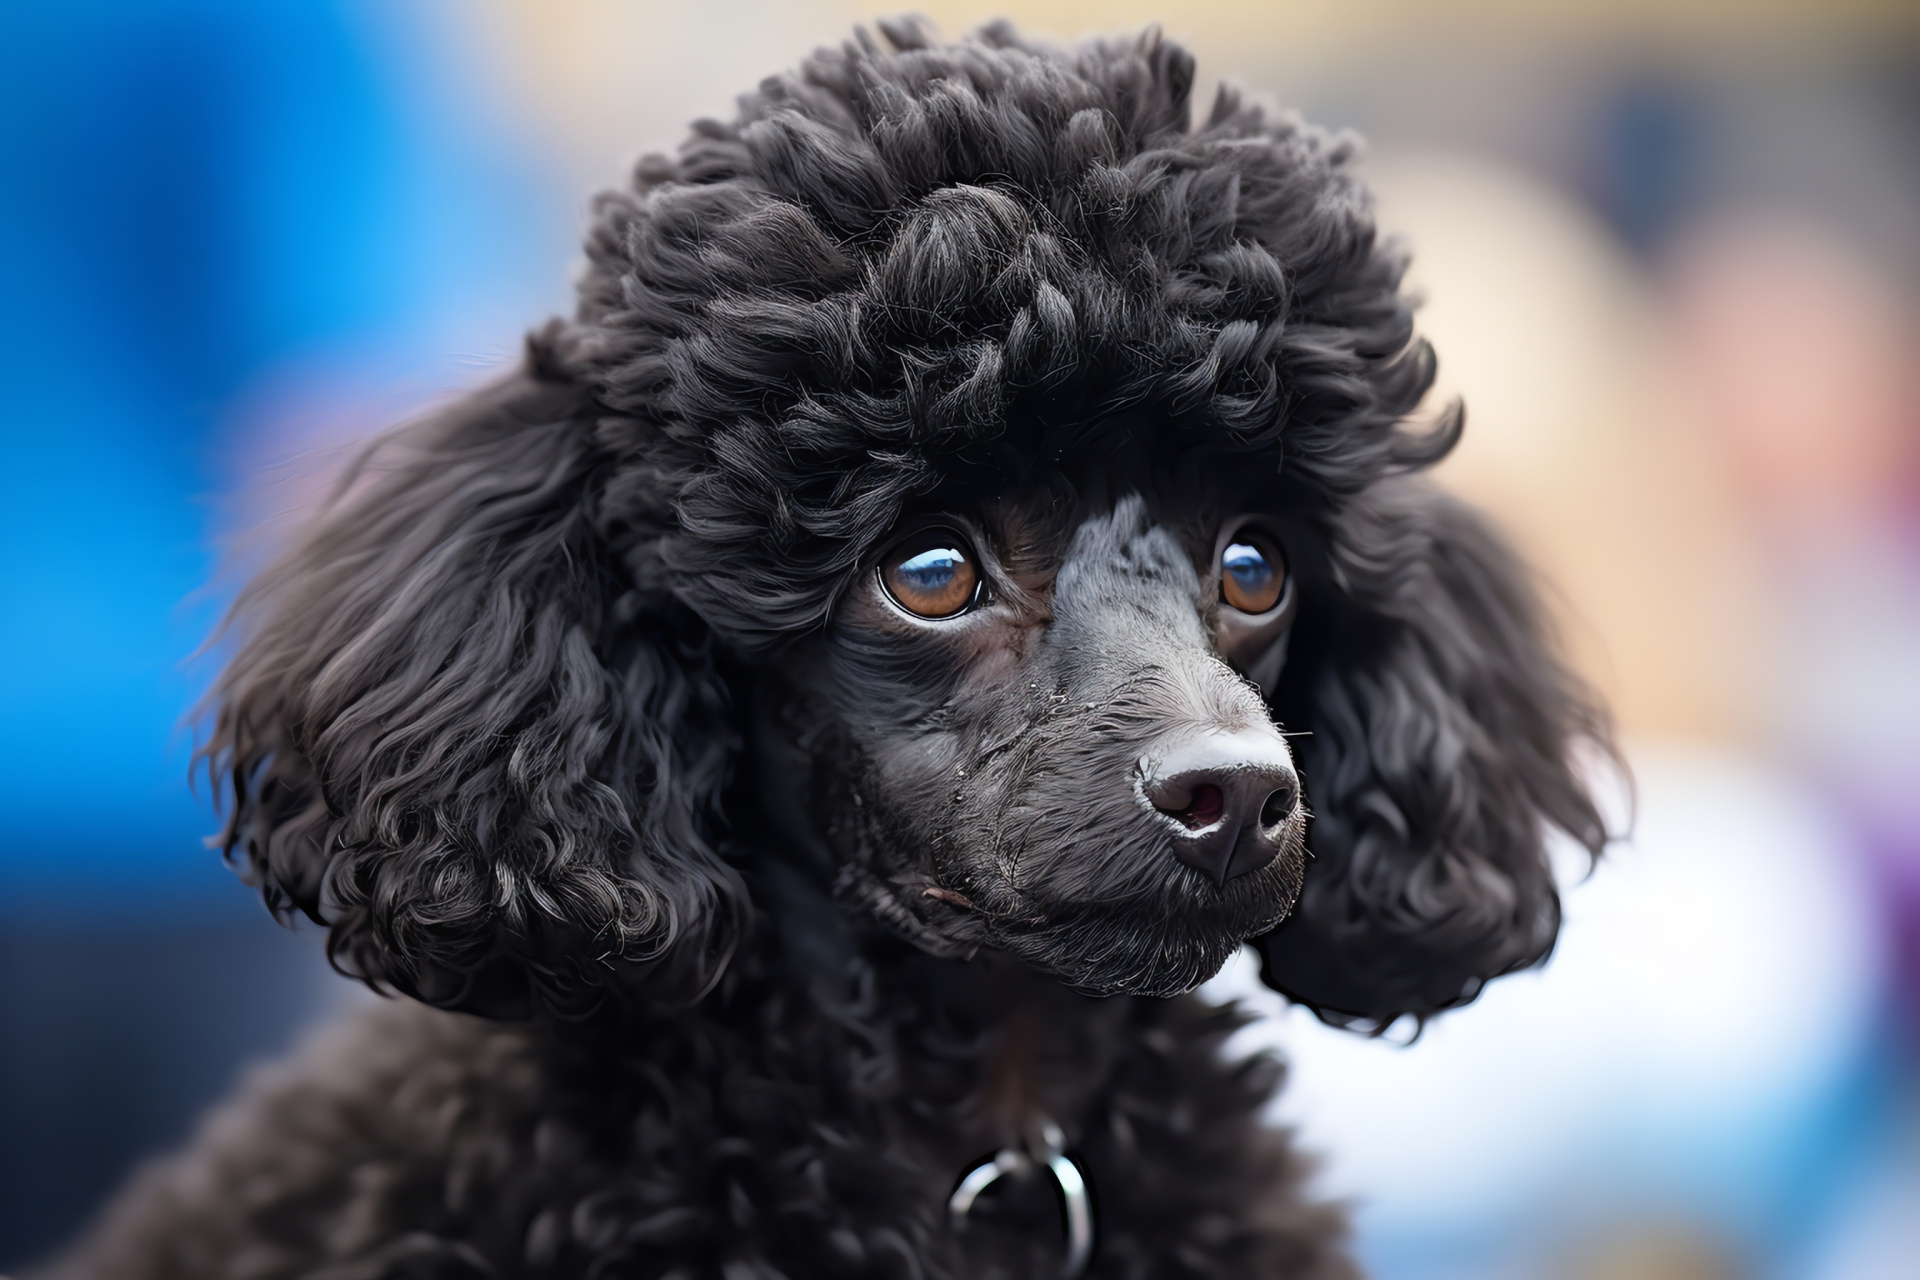 Toy Poodle, canine with blue eyes, glossy black coat, short curly fur, elegant appearance, HD Desktop Image